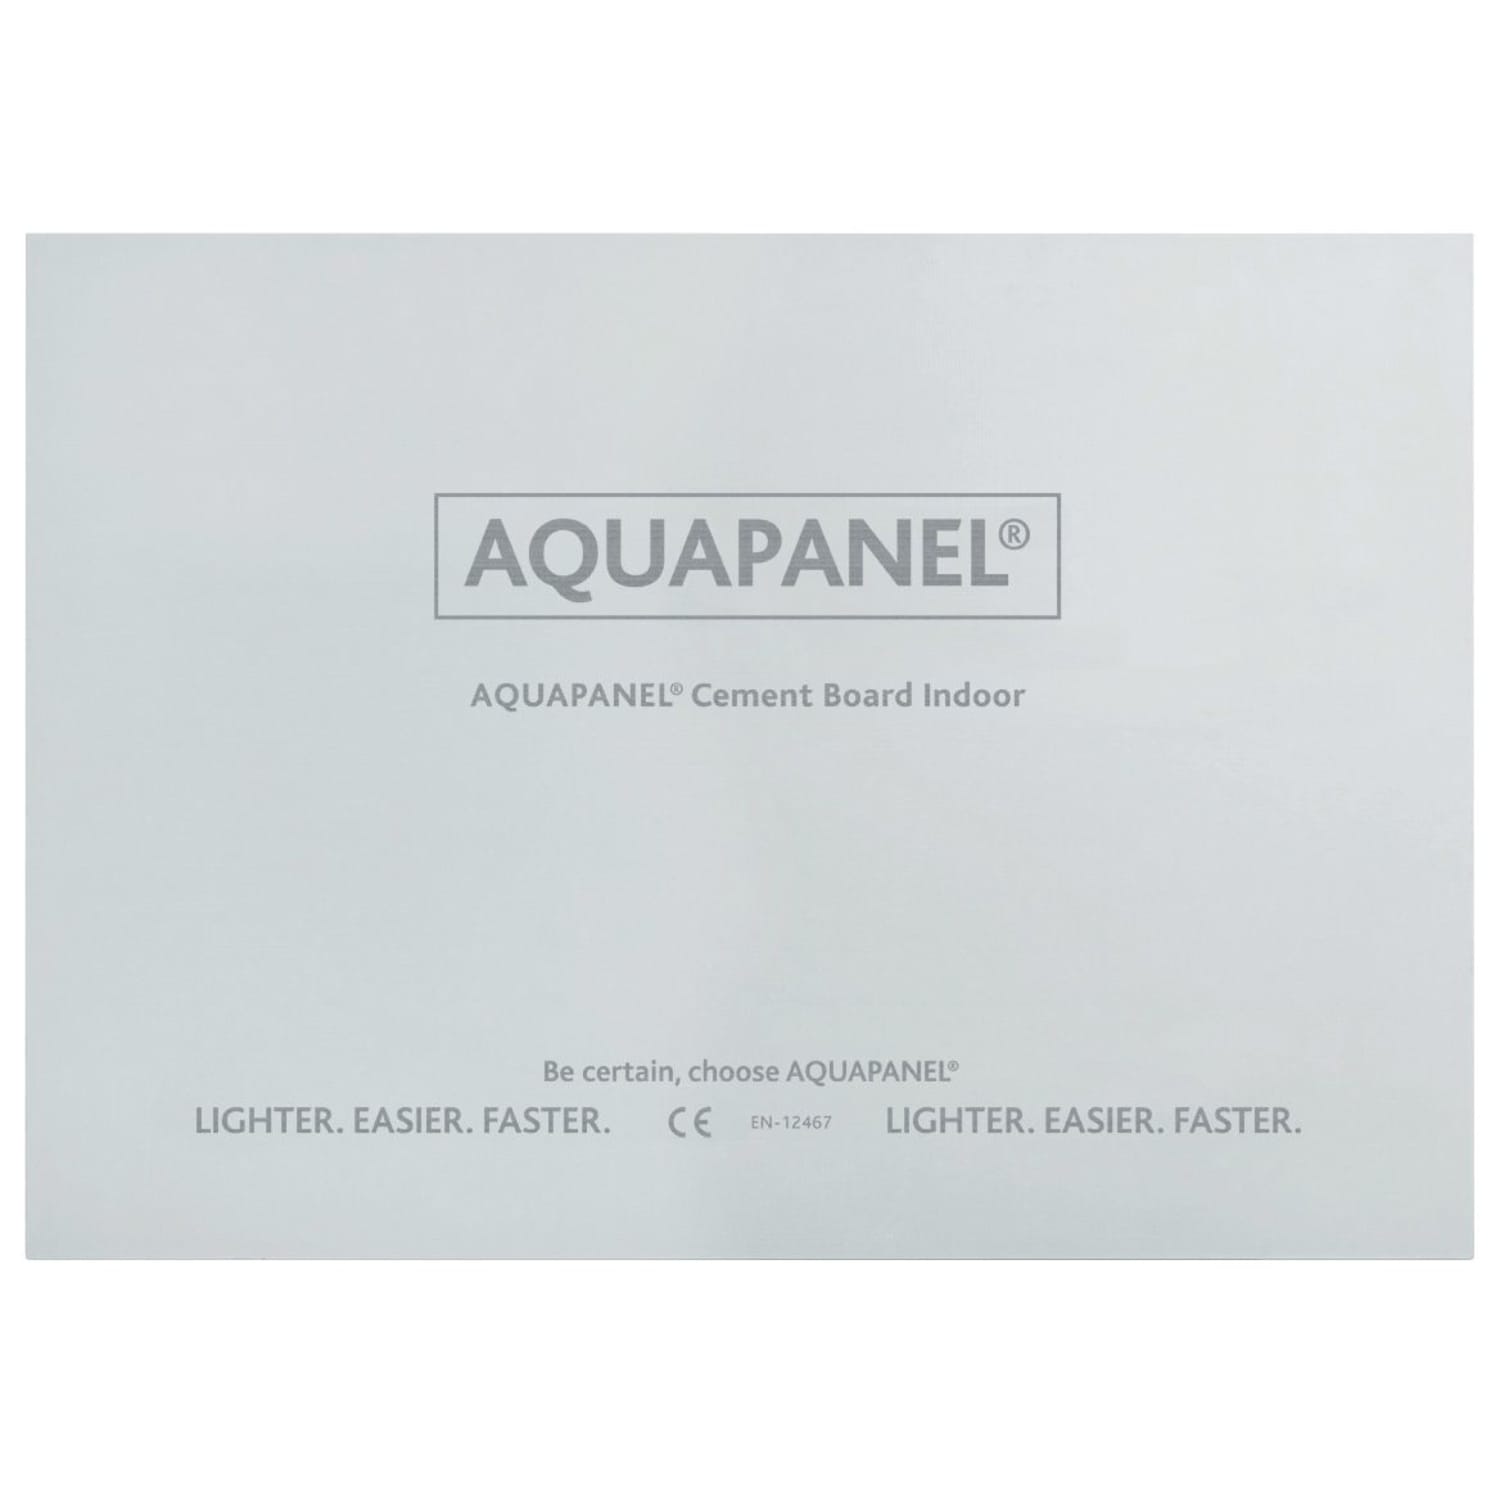 InsulationUK.co.uk Knauf Aquapanel 1200 x 900 x 12.55mm